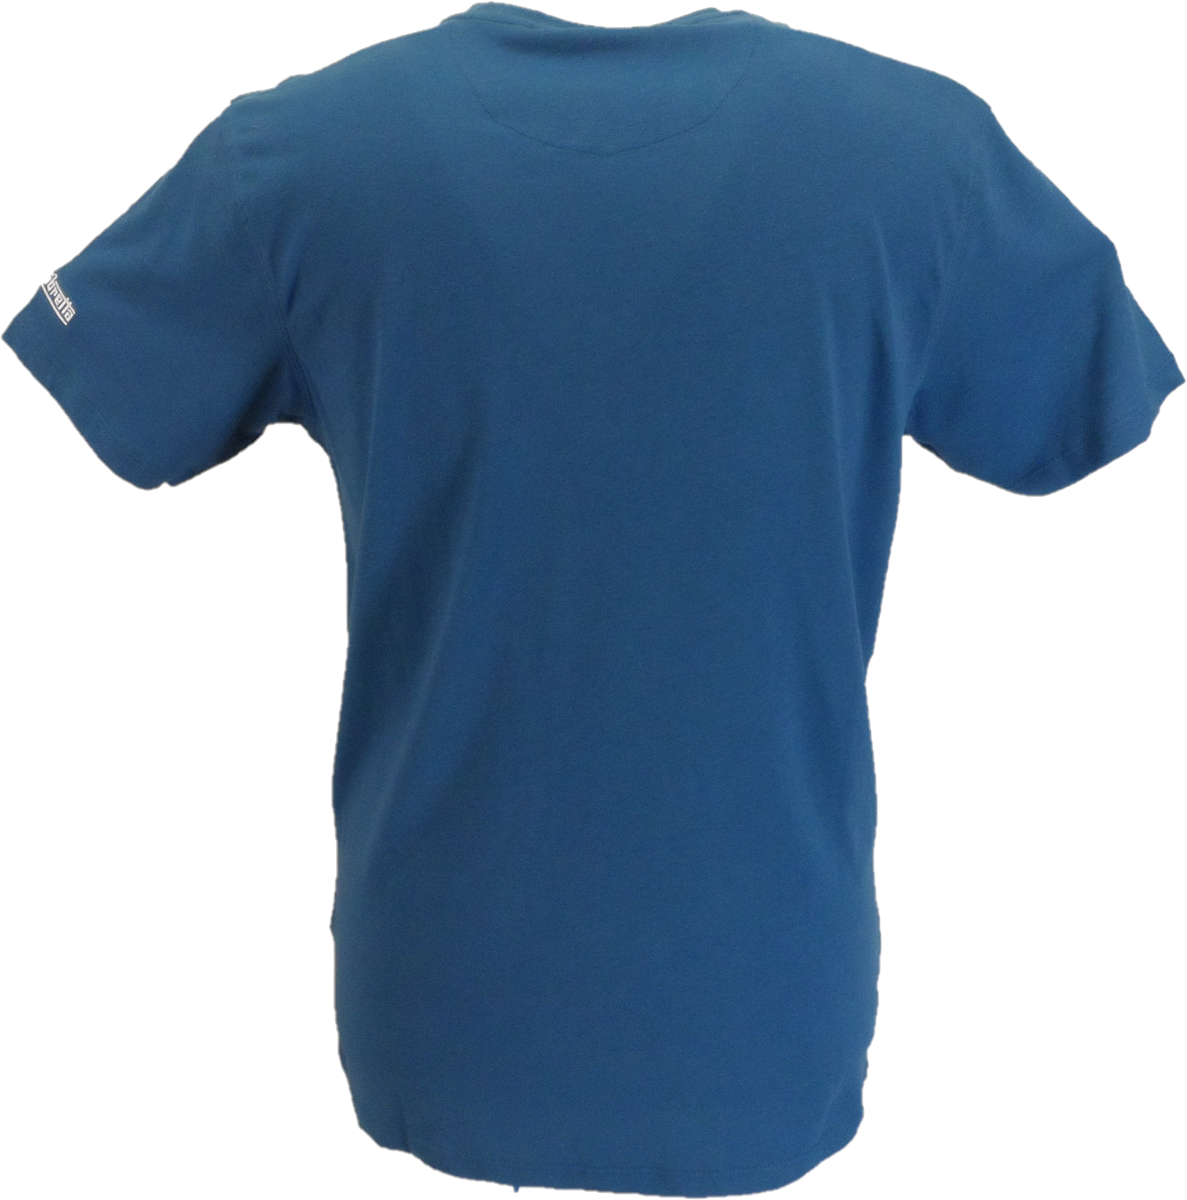 Lambretta Dark Blue Retro Vintage Print T-Shirt